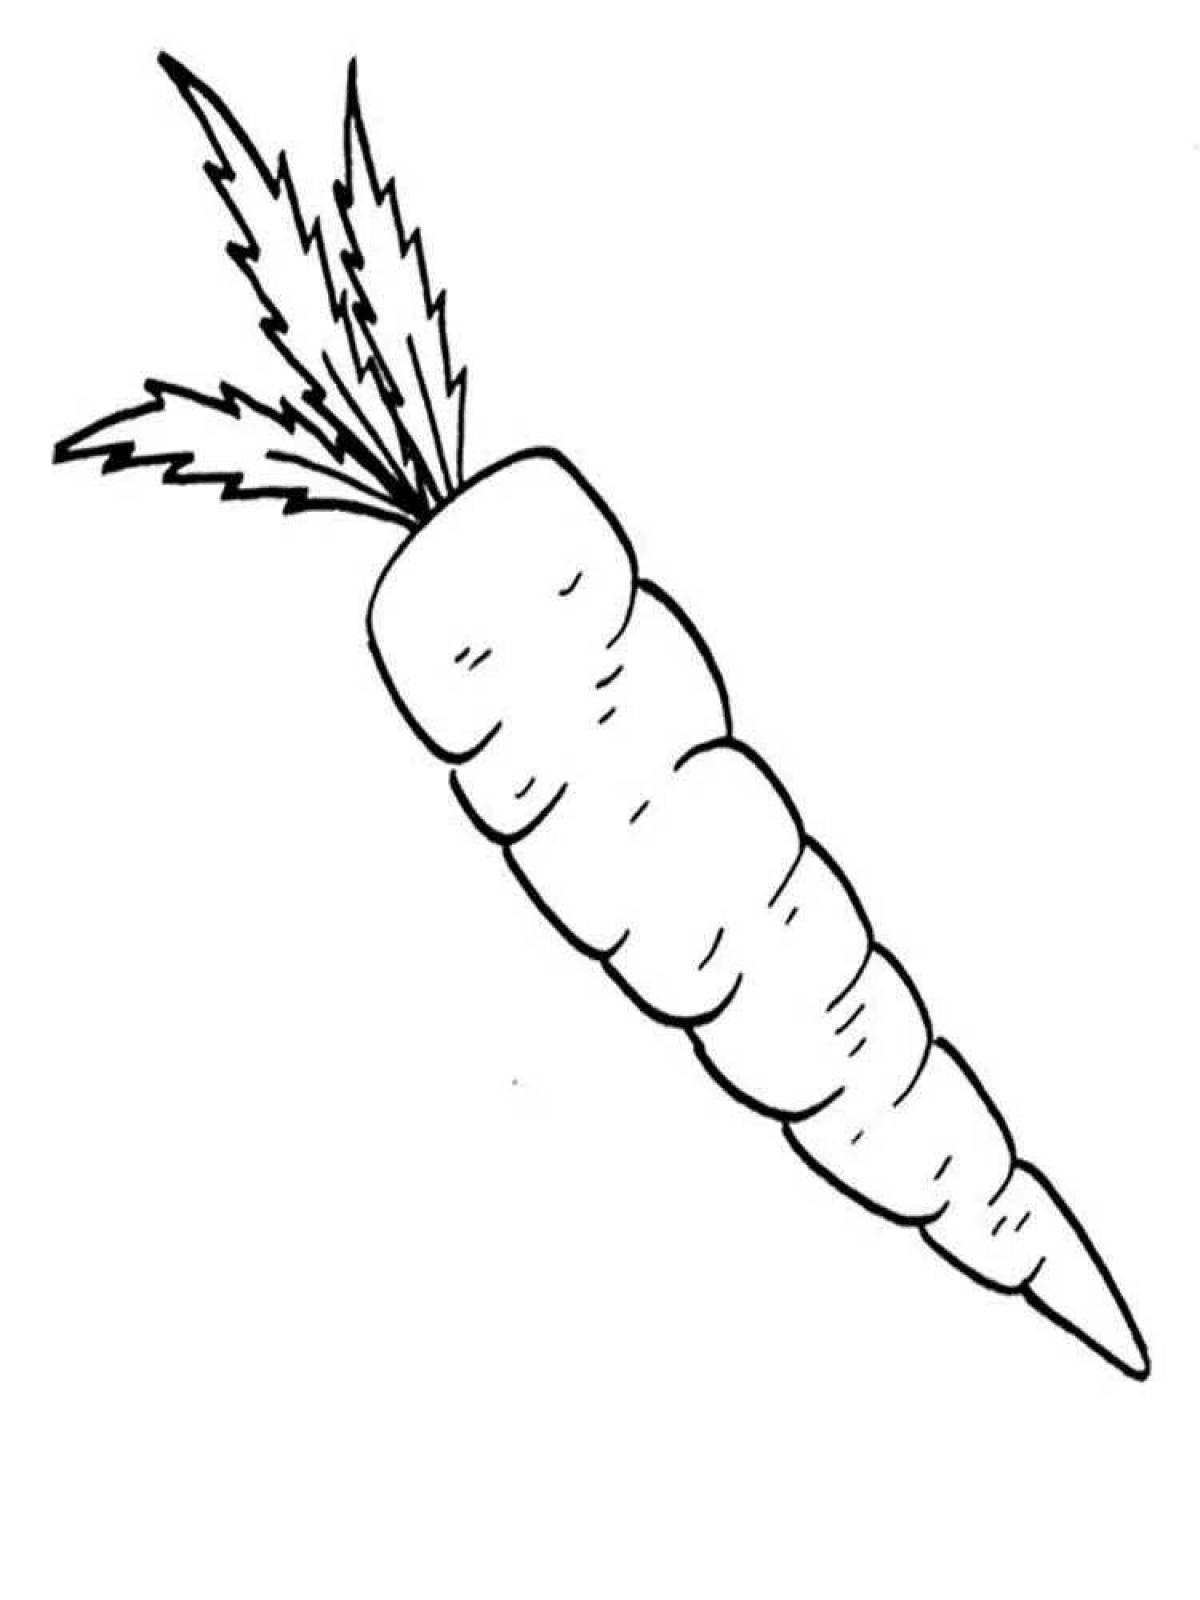 Carrot creative drawing